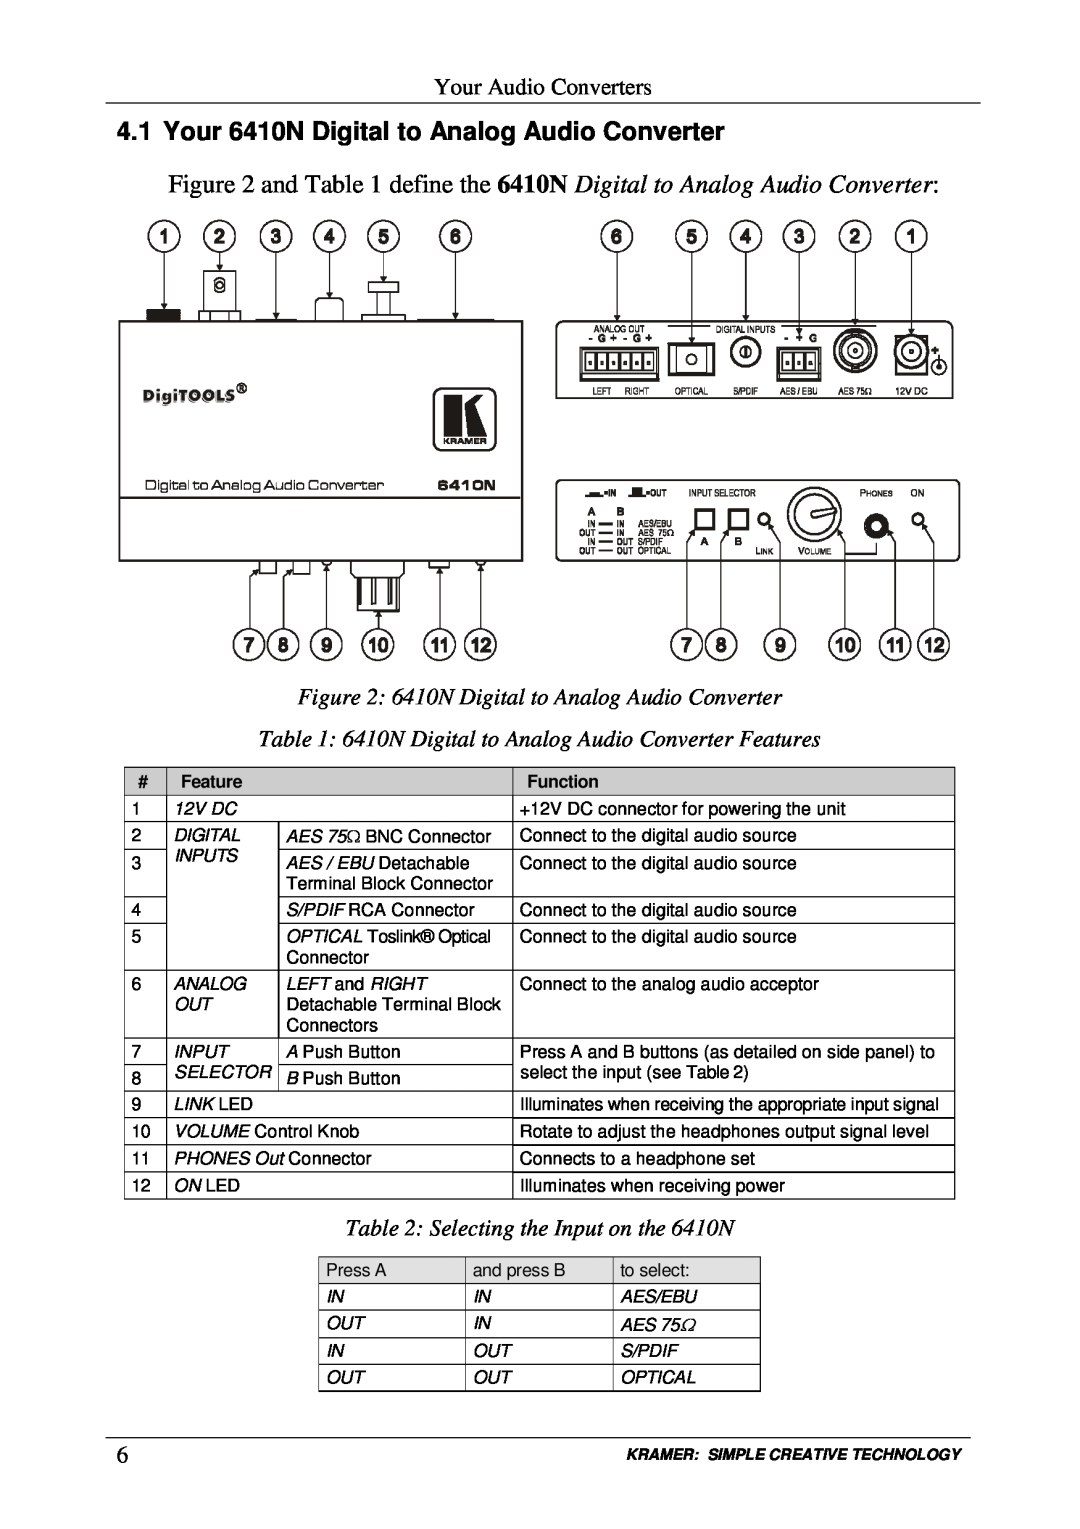 Kramer Electronics user manual E B v GEBAi, 6410N Digital to Analog Audio Converter, Selecting the Input on the 6410N 